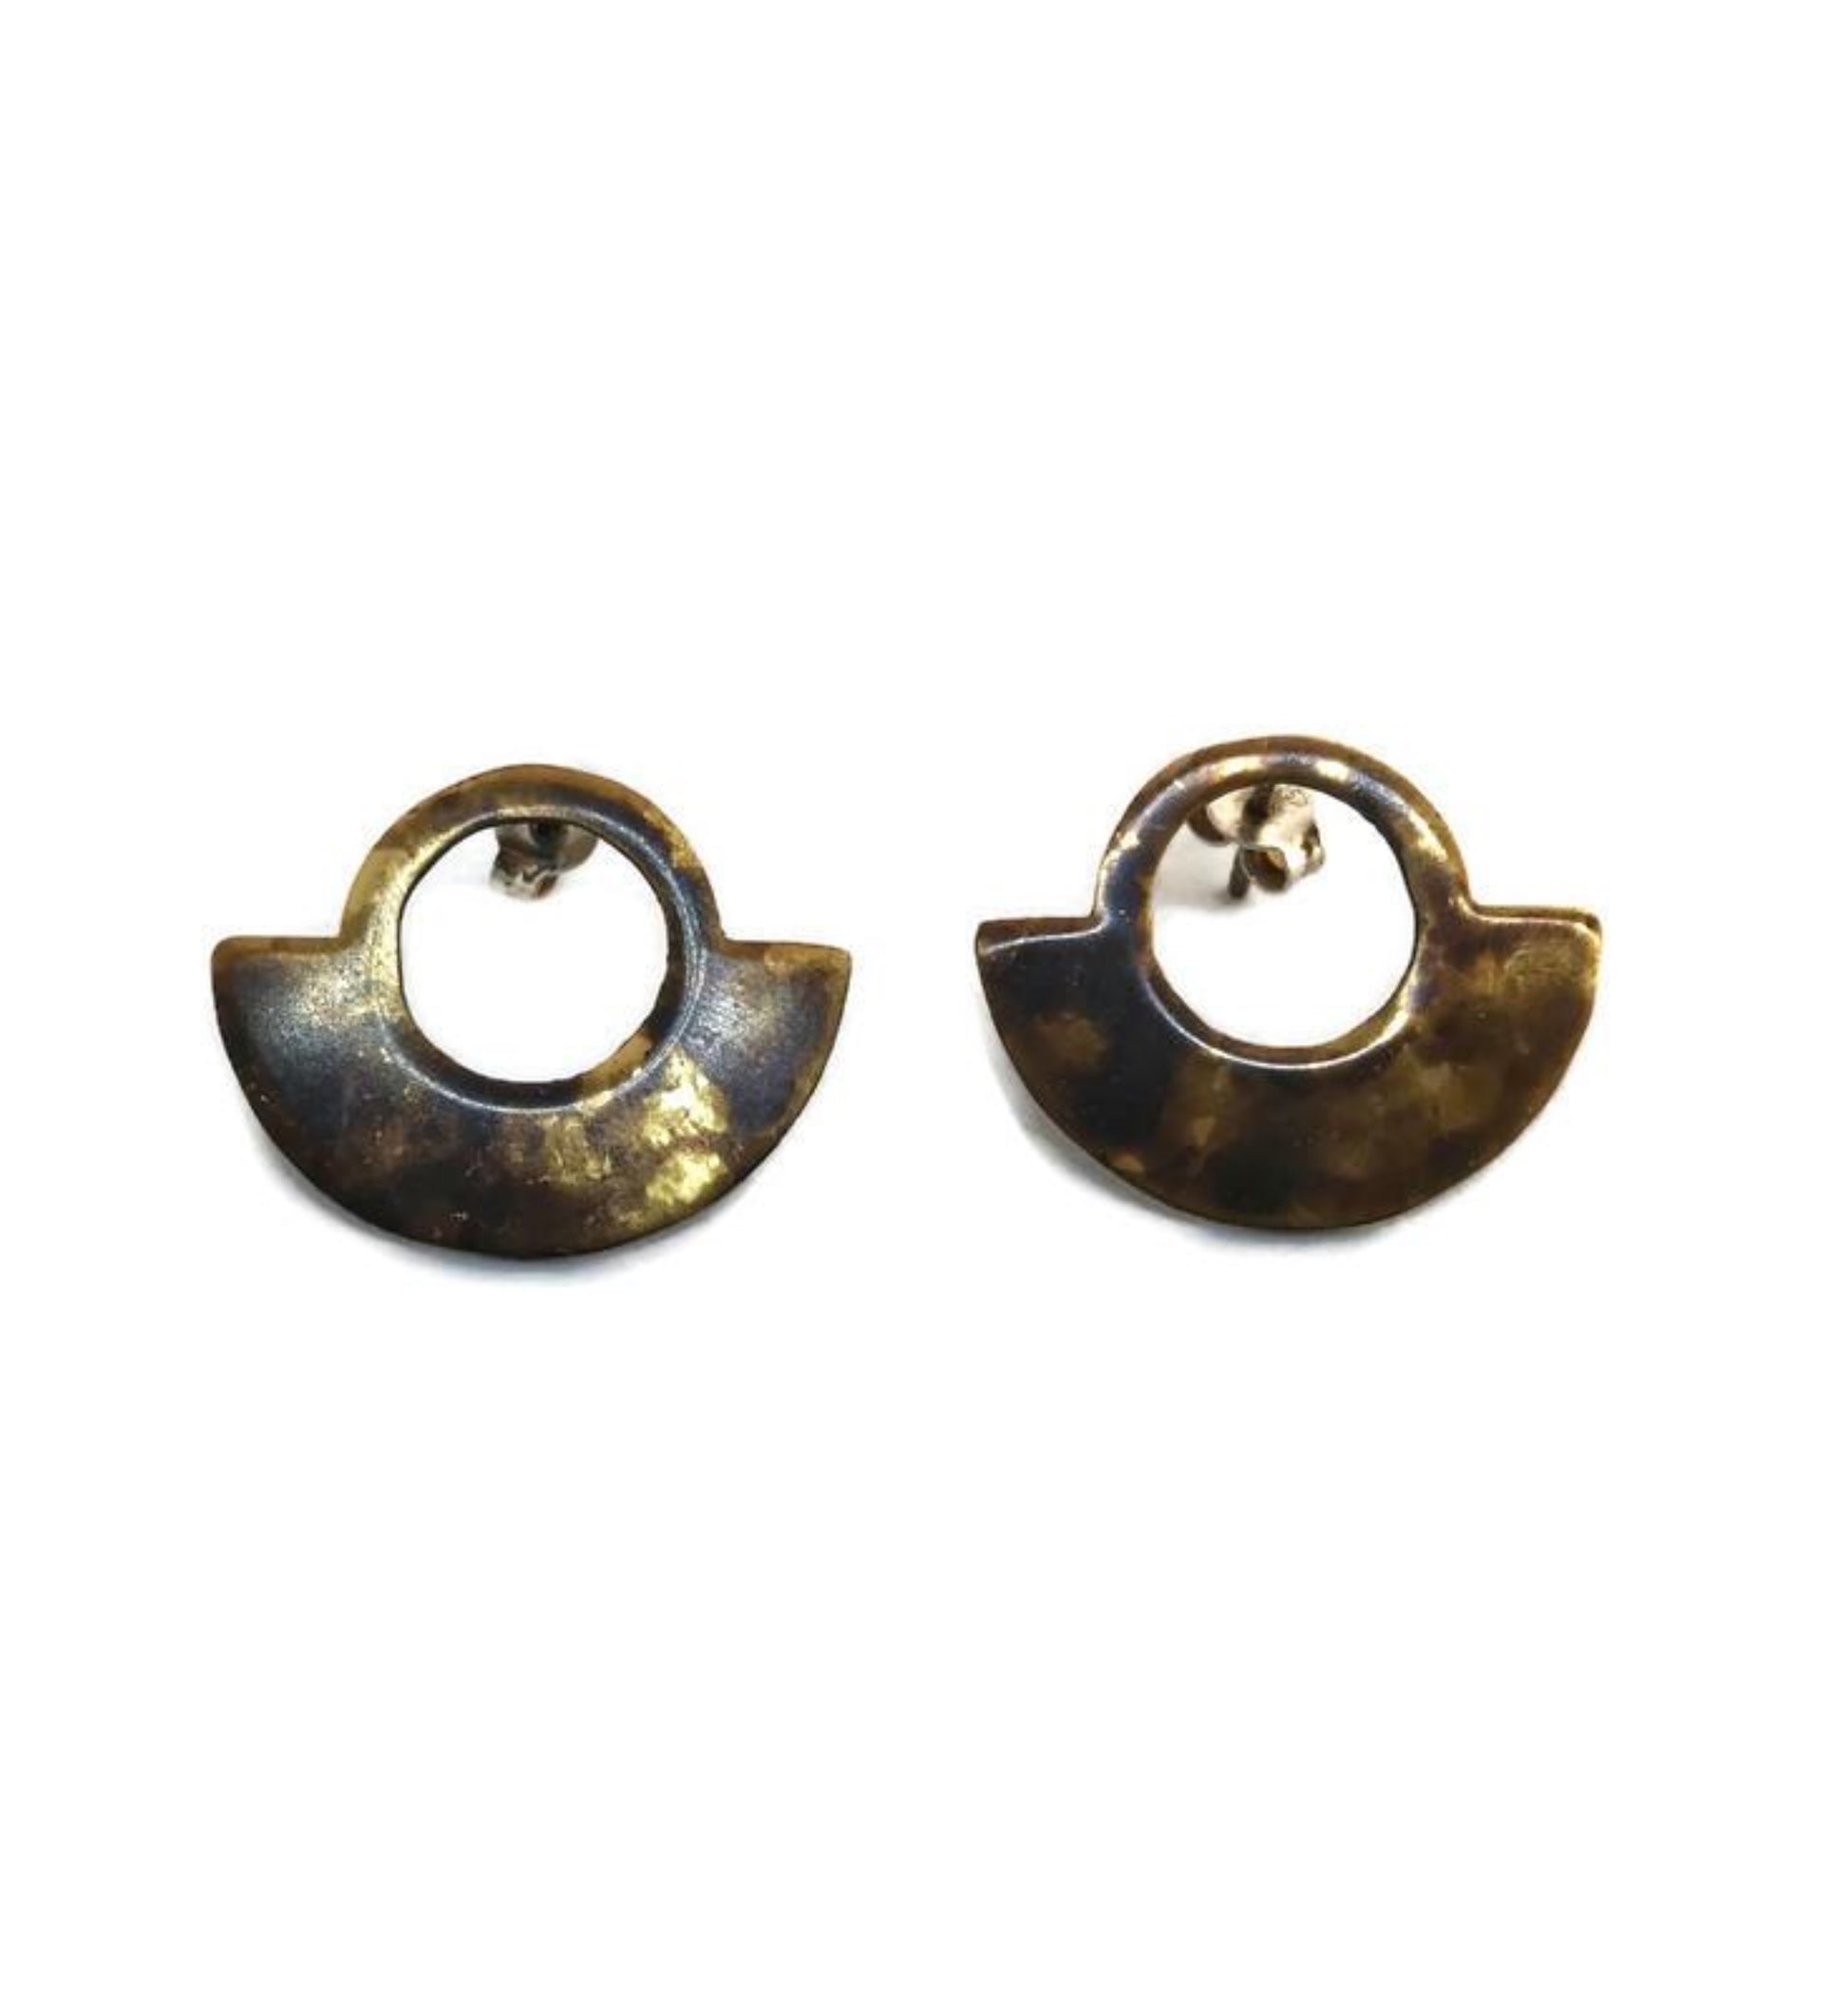 Oxidised brass earrings | Yellow - Black Balancing Earrings - CURIUDOOxidised brass earrings | Yellow - Black Balancing Earrings - CURIUDO